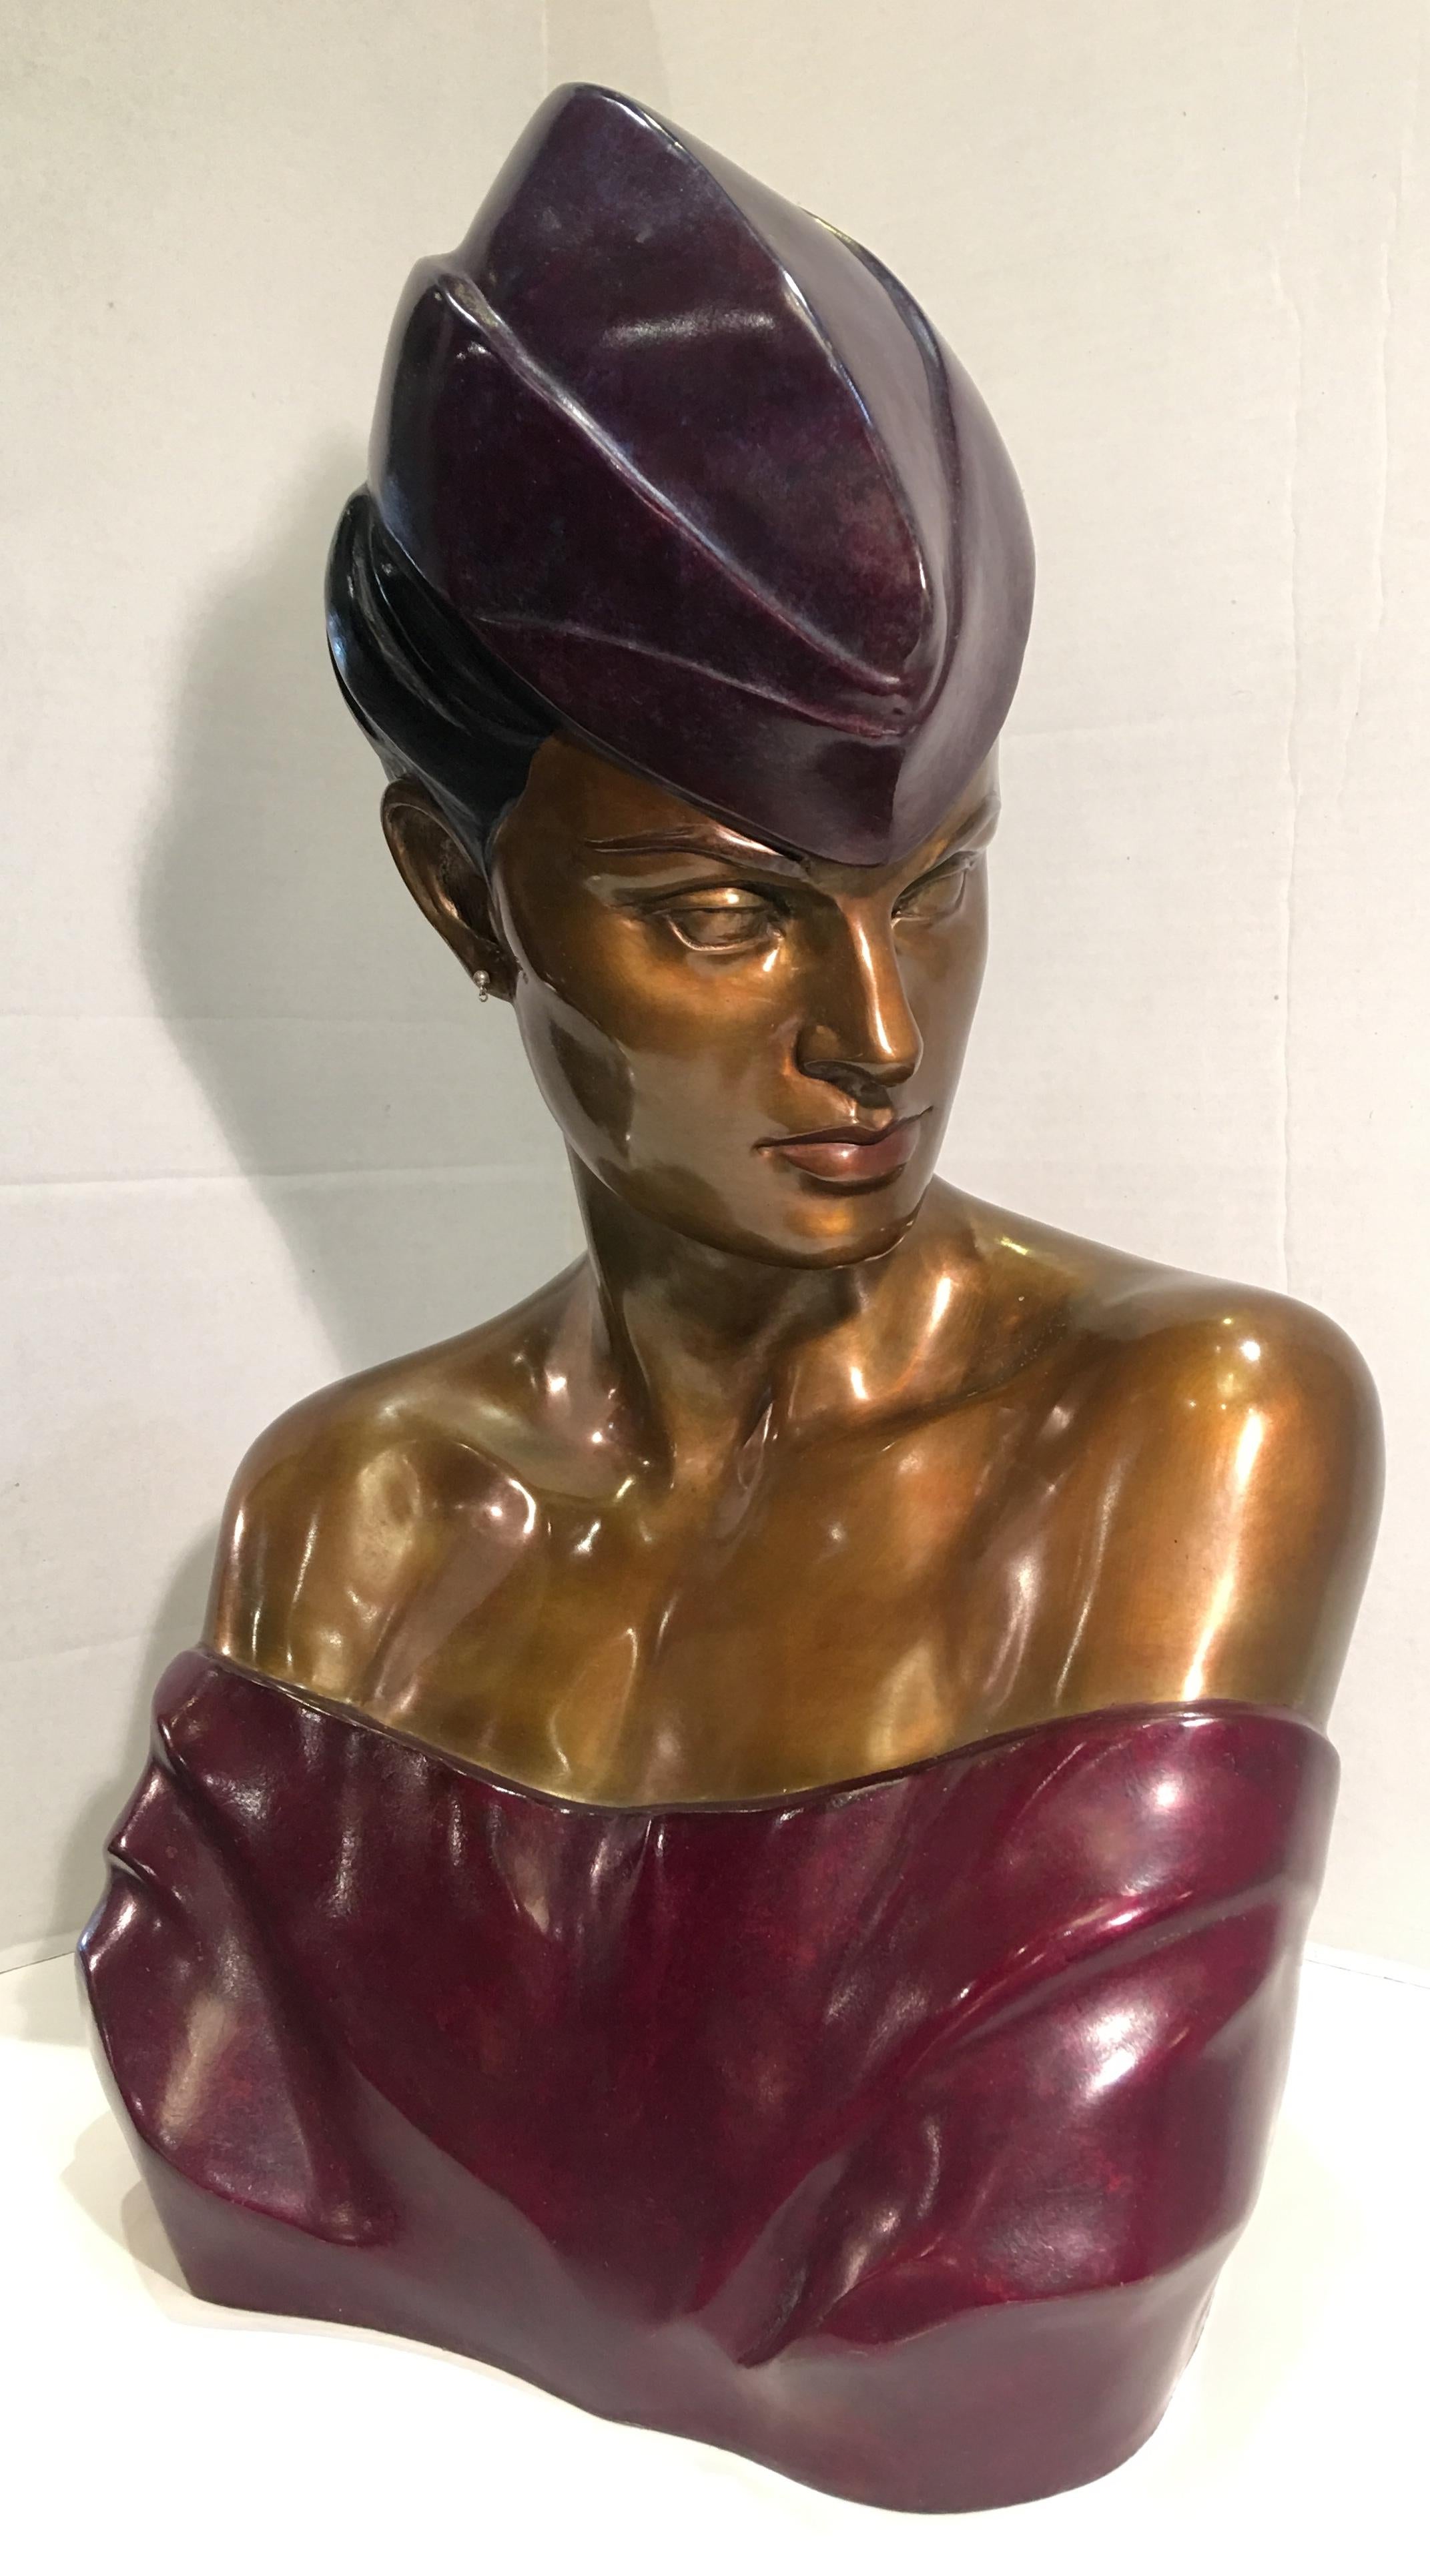 Genuine, limited edition, hand-made, original cast bronze bust sculpture titled 